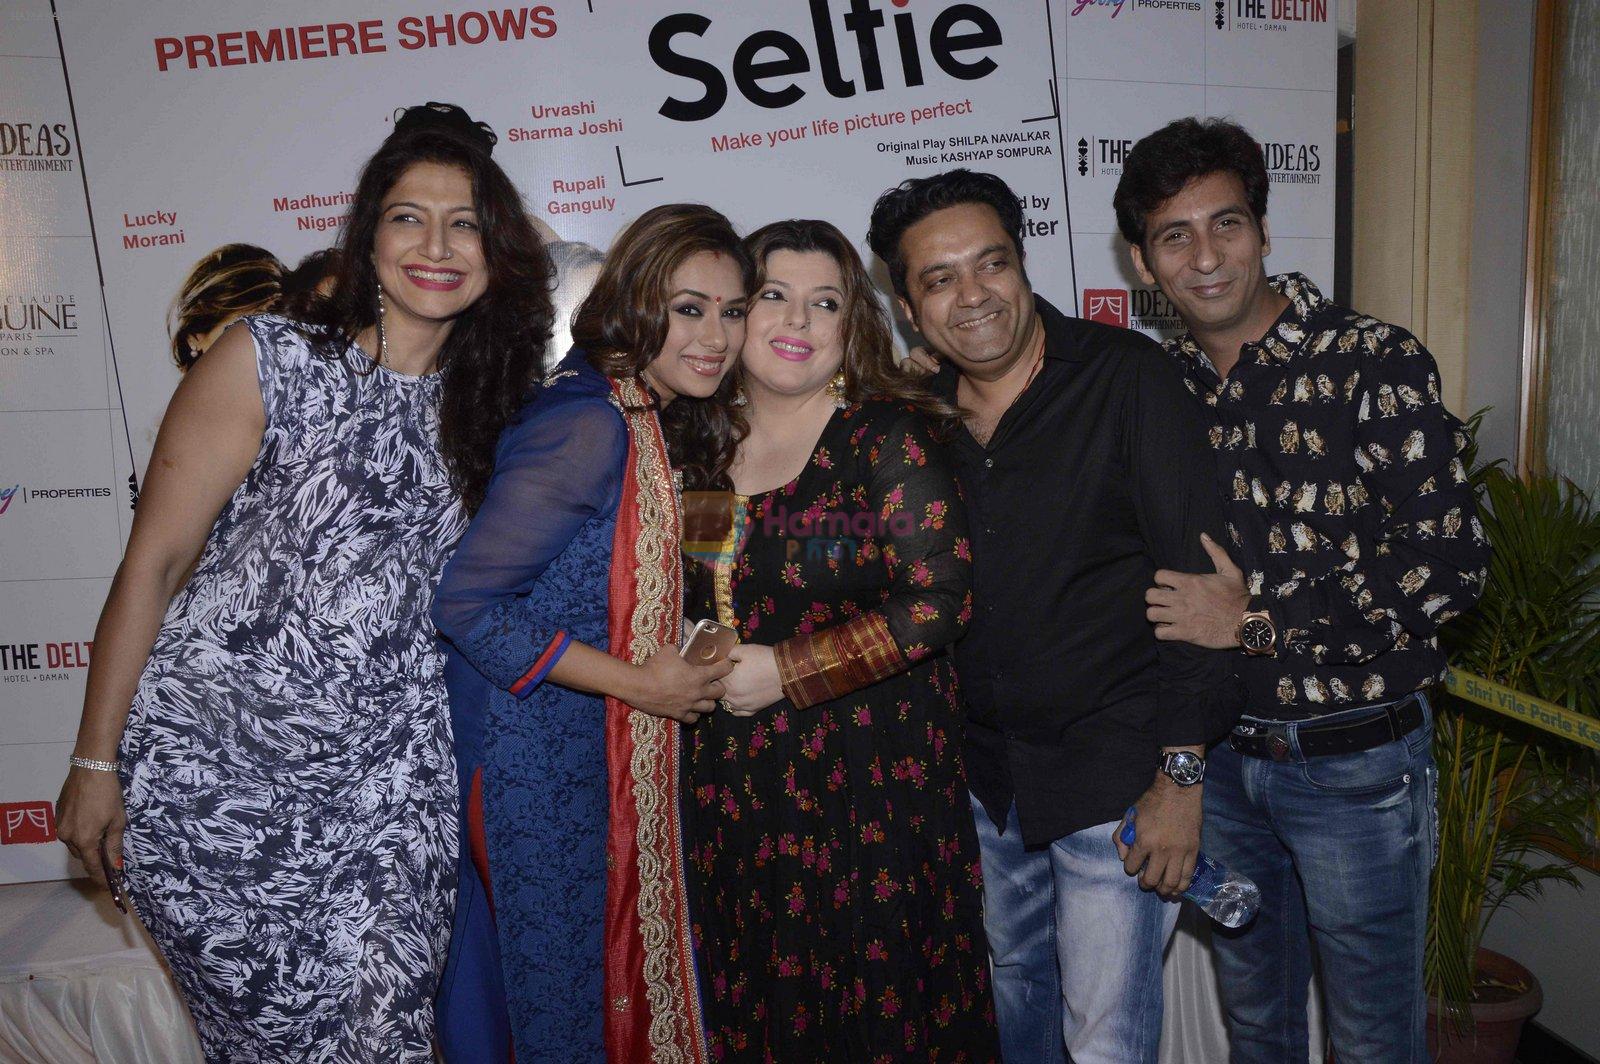 Rupali Ganguly, Delnaz at Paritosh Painter play Selfie on 1st April 2016